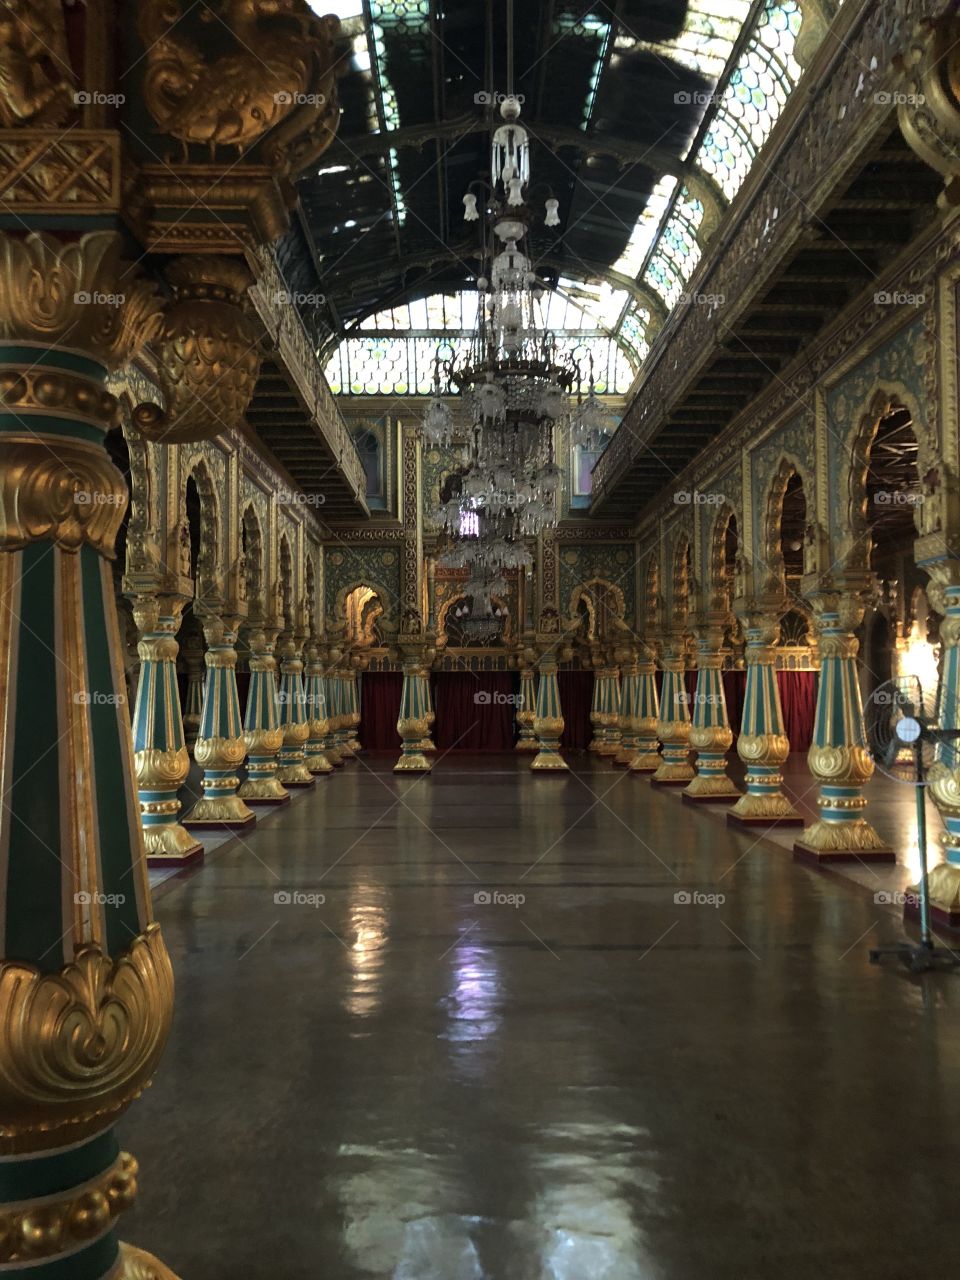 Courtyard of Tipu Sultan 